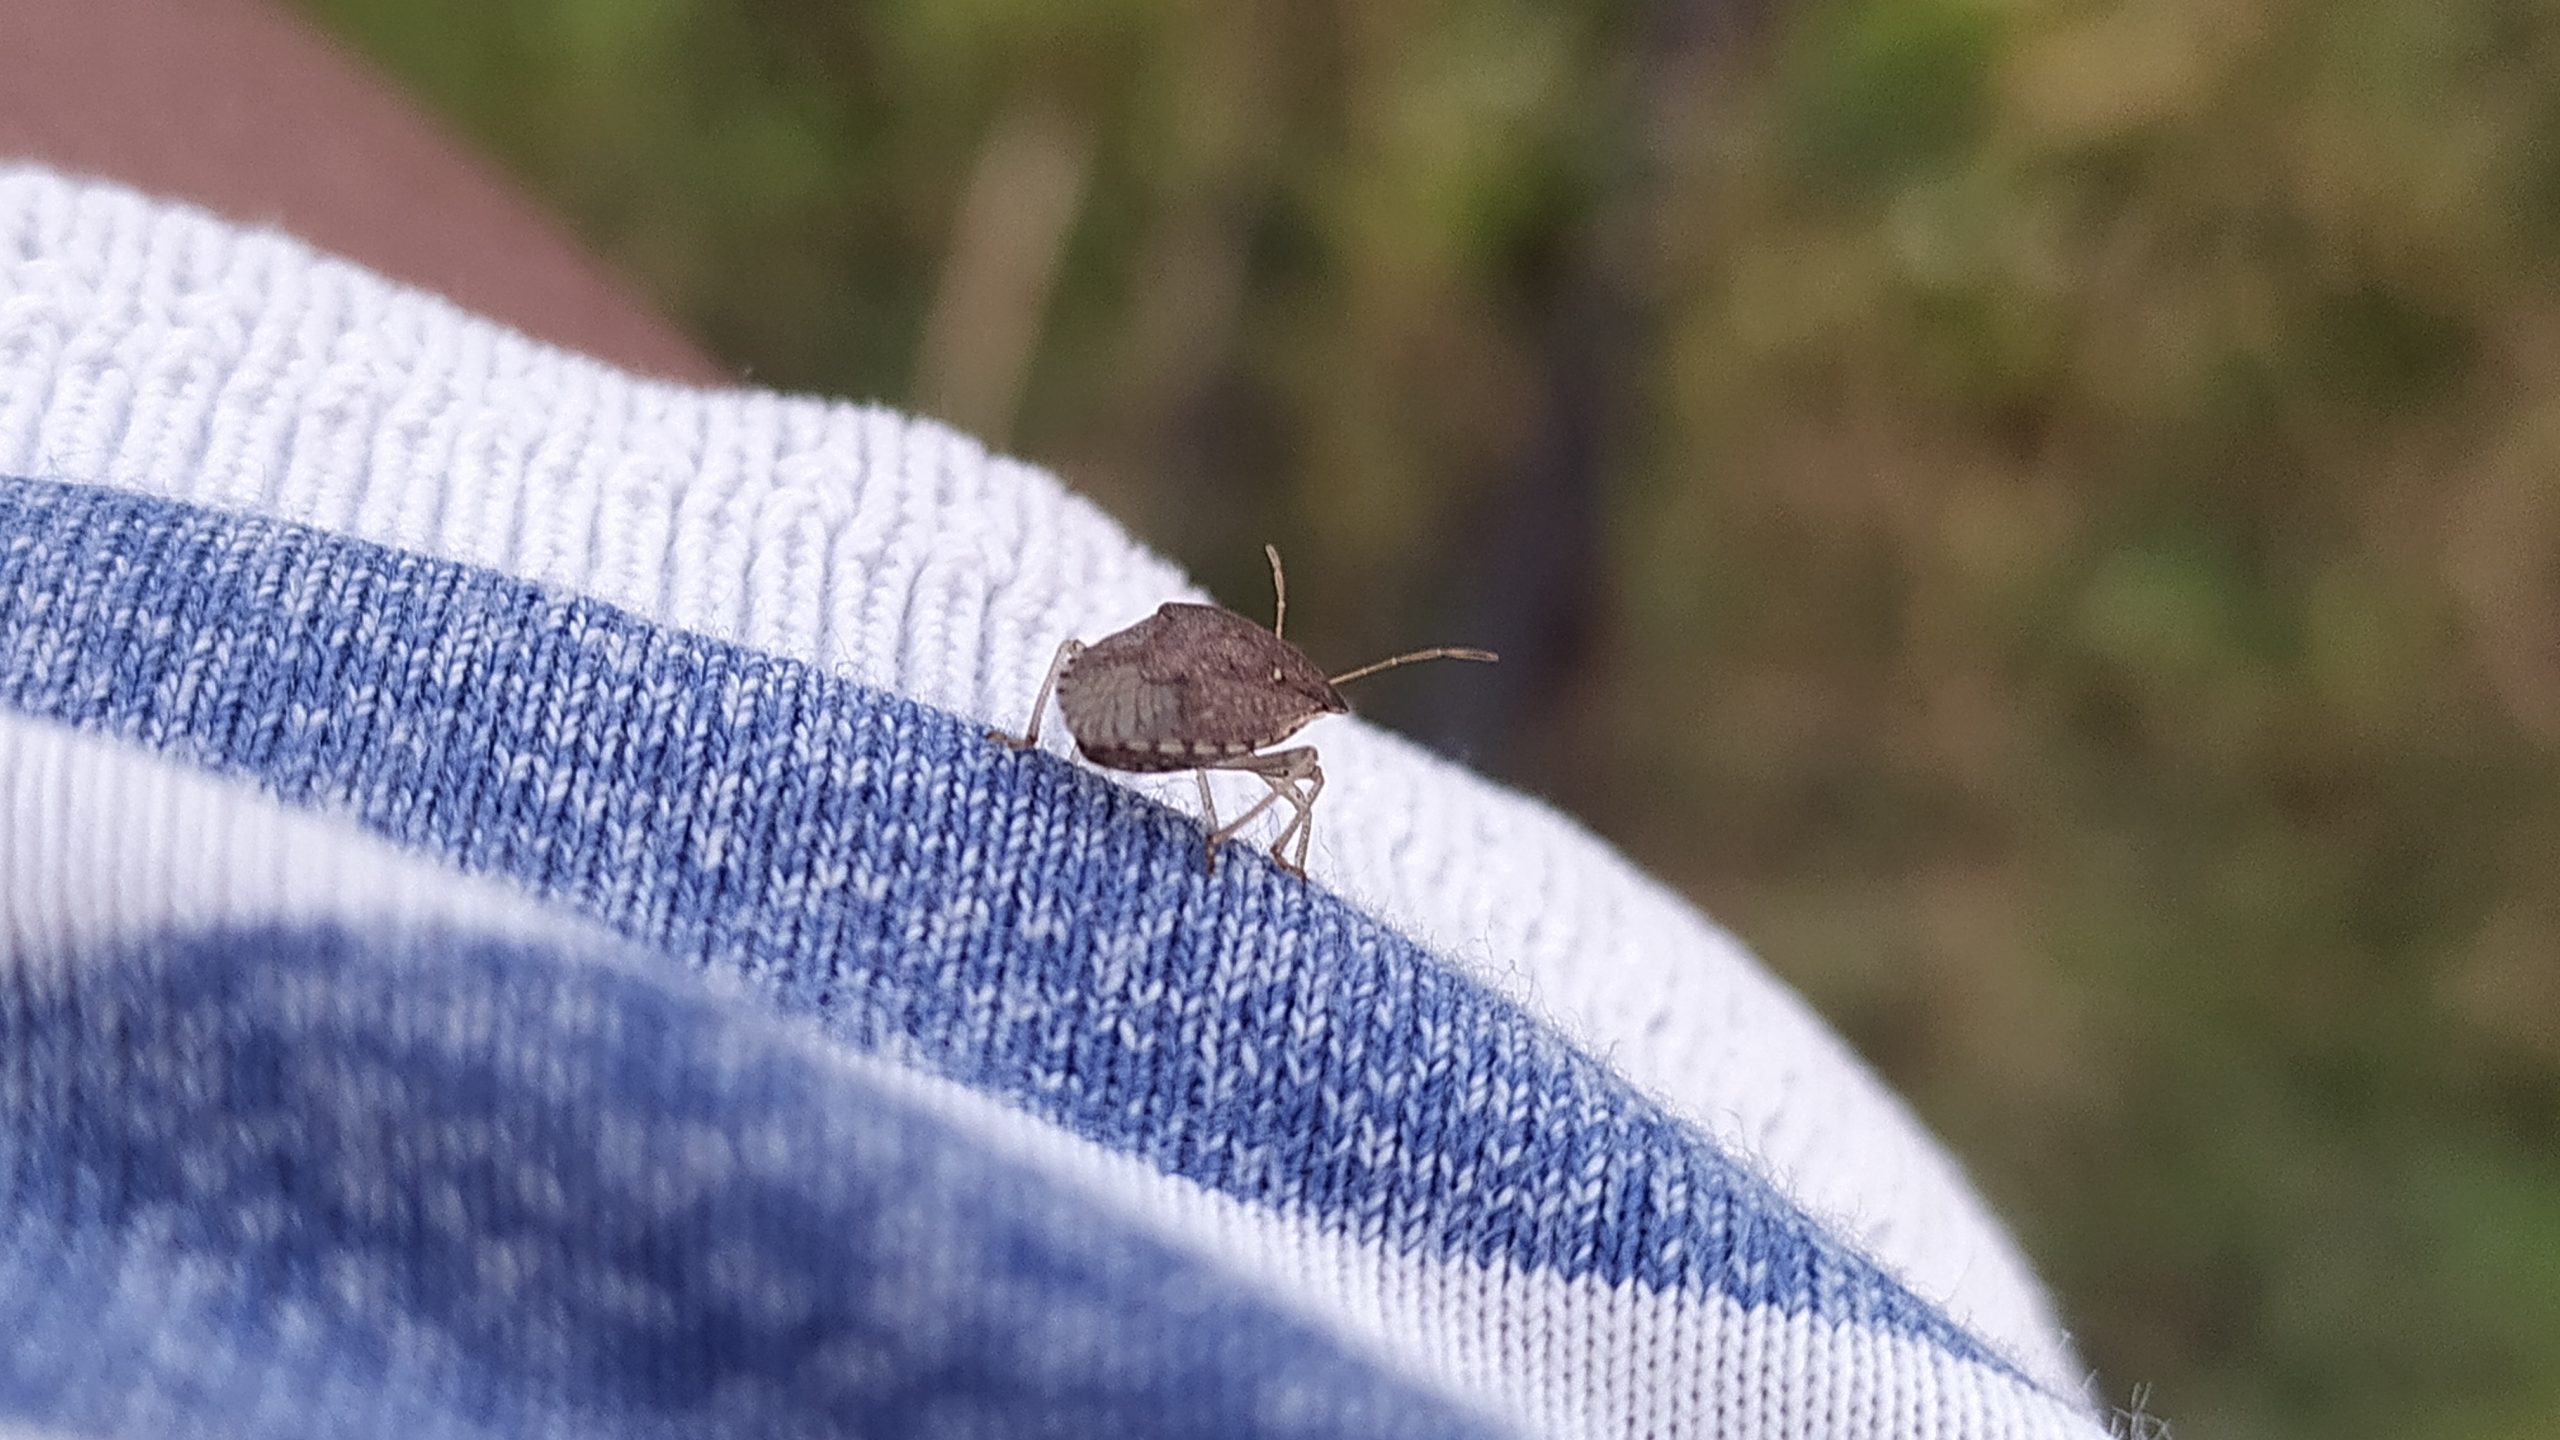 A bug on fabric